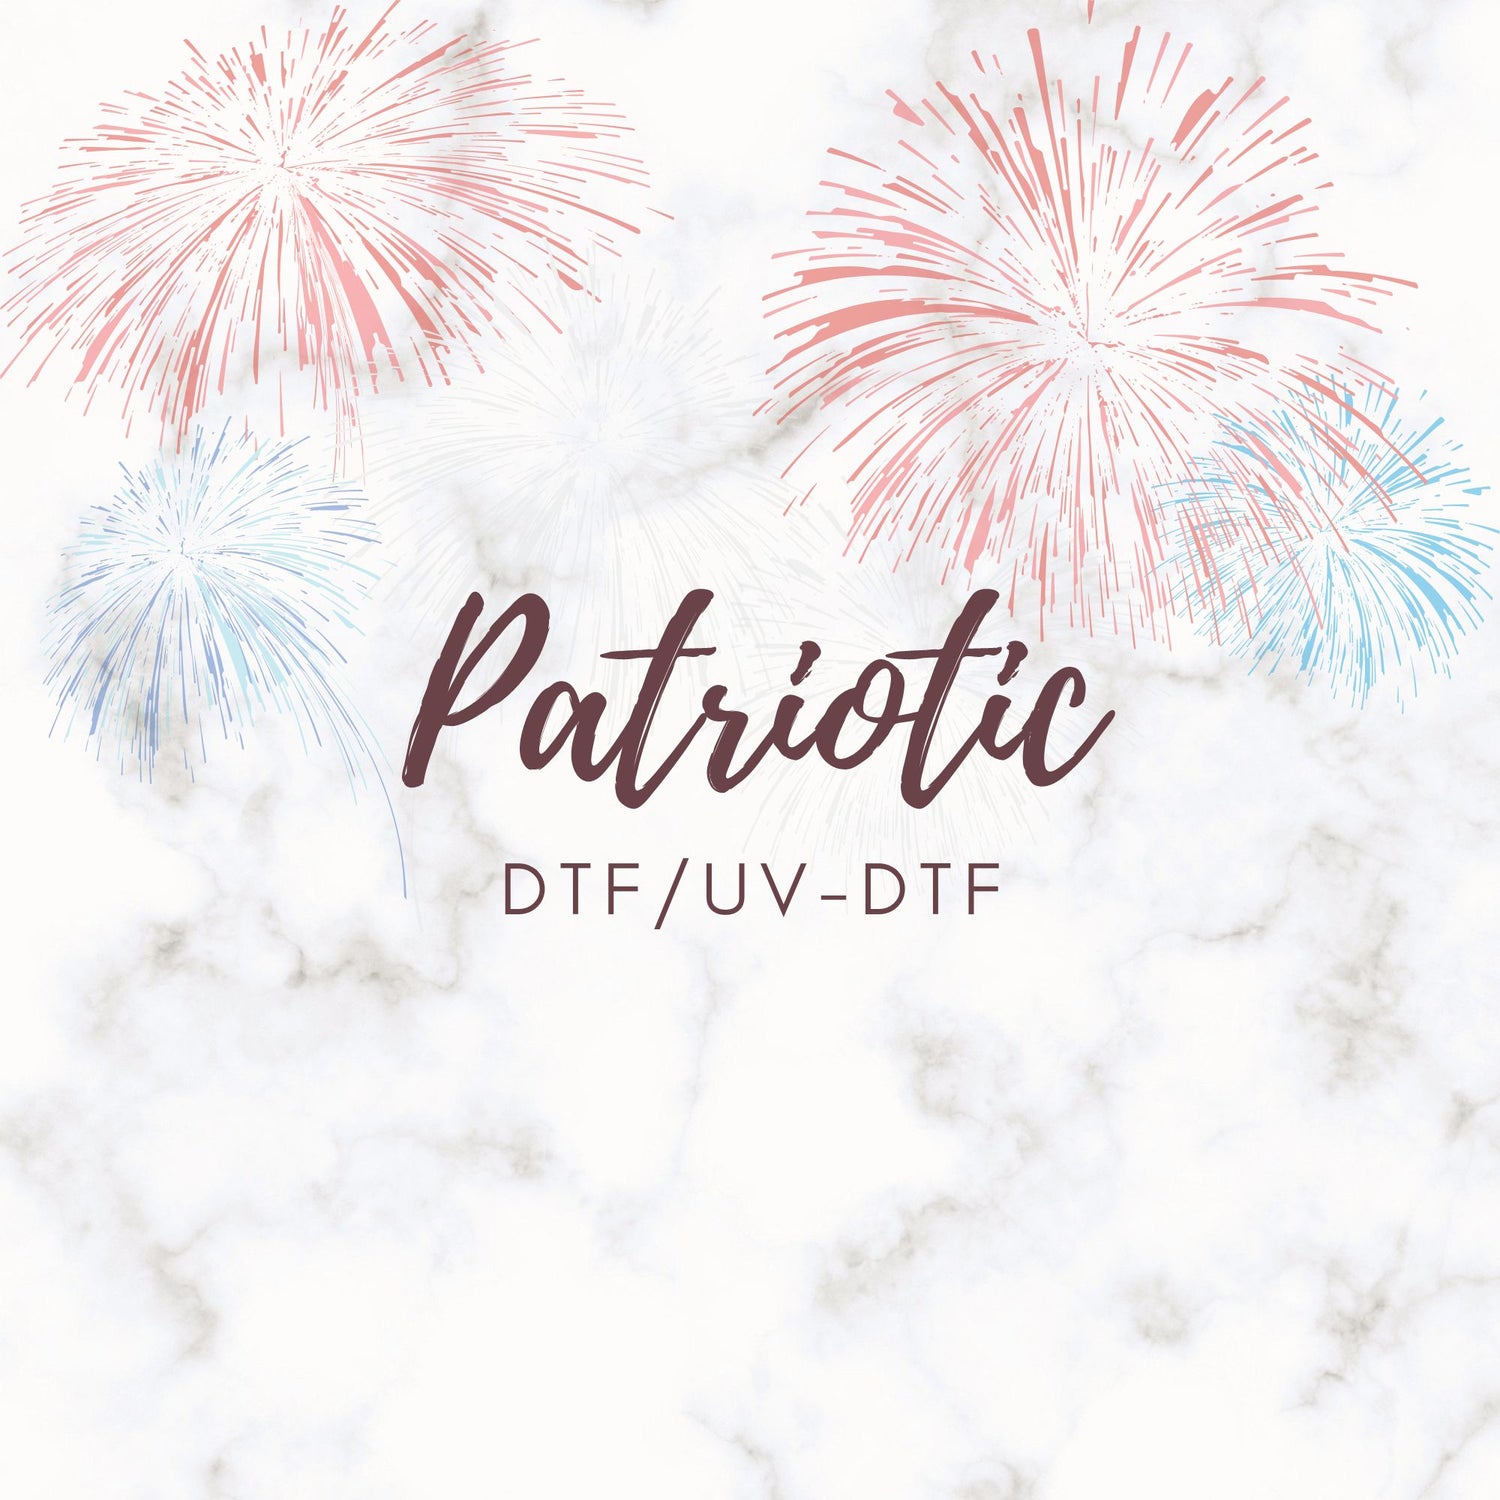 Patriotic - 4th of July DTF/UVDTF